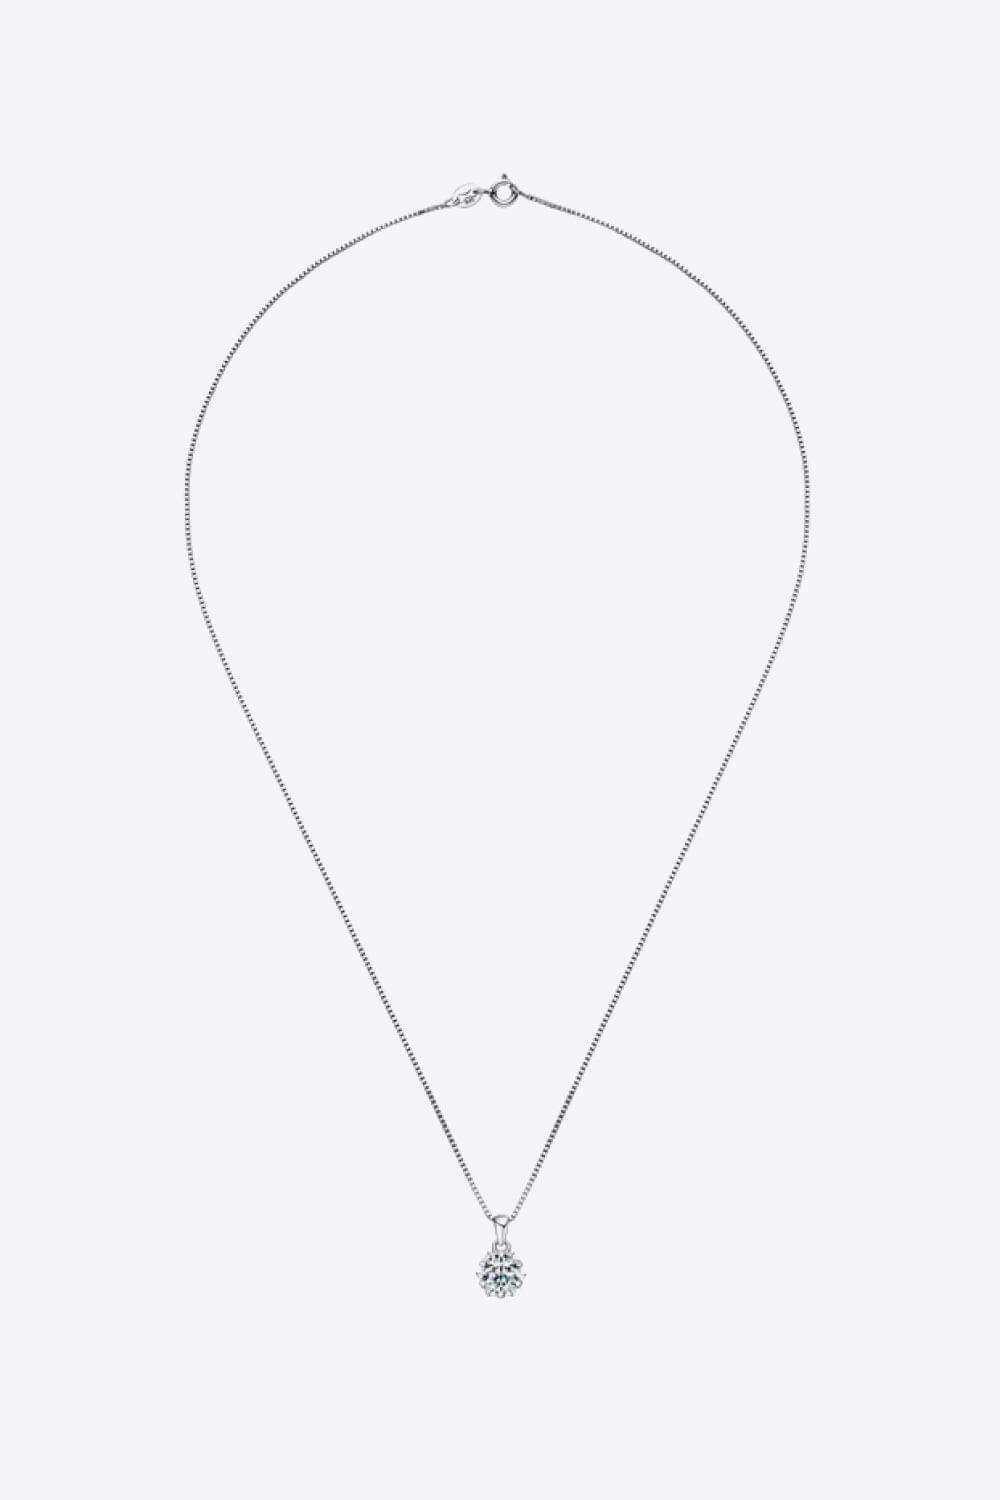 - 1 Carat Moissanite Pendant Platinum-Plated Necklace - necklace at TFC&H Co.